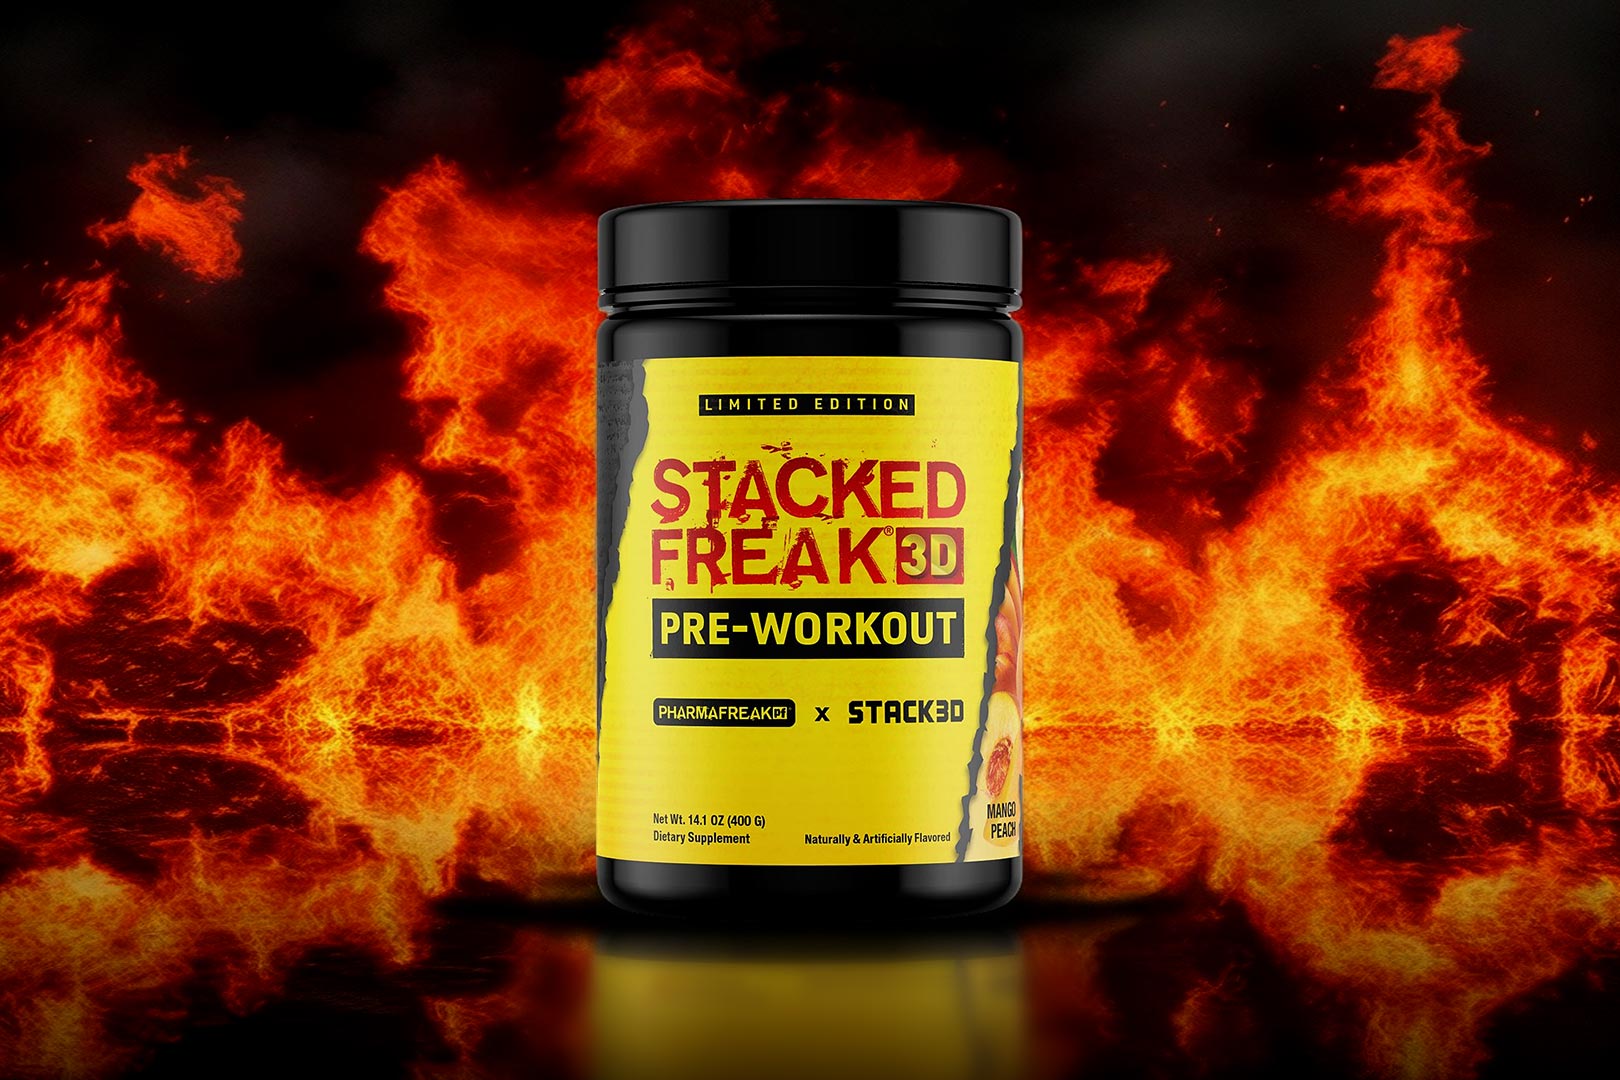 Stacked Freak pre-workout from PharmaFreak and Stack3d is here alongside a full breakdown